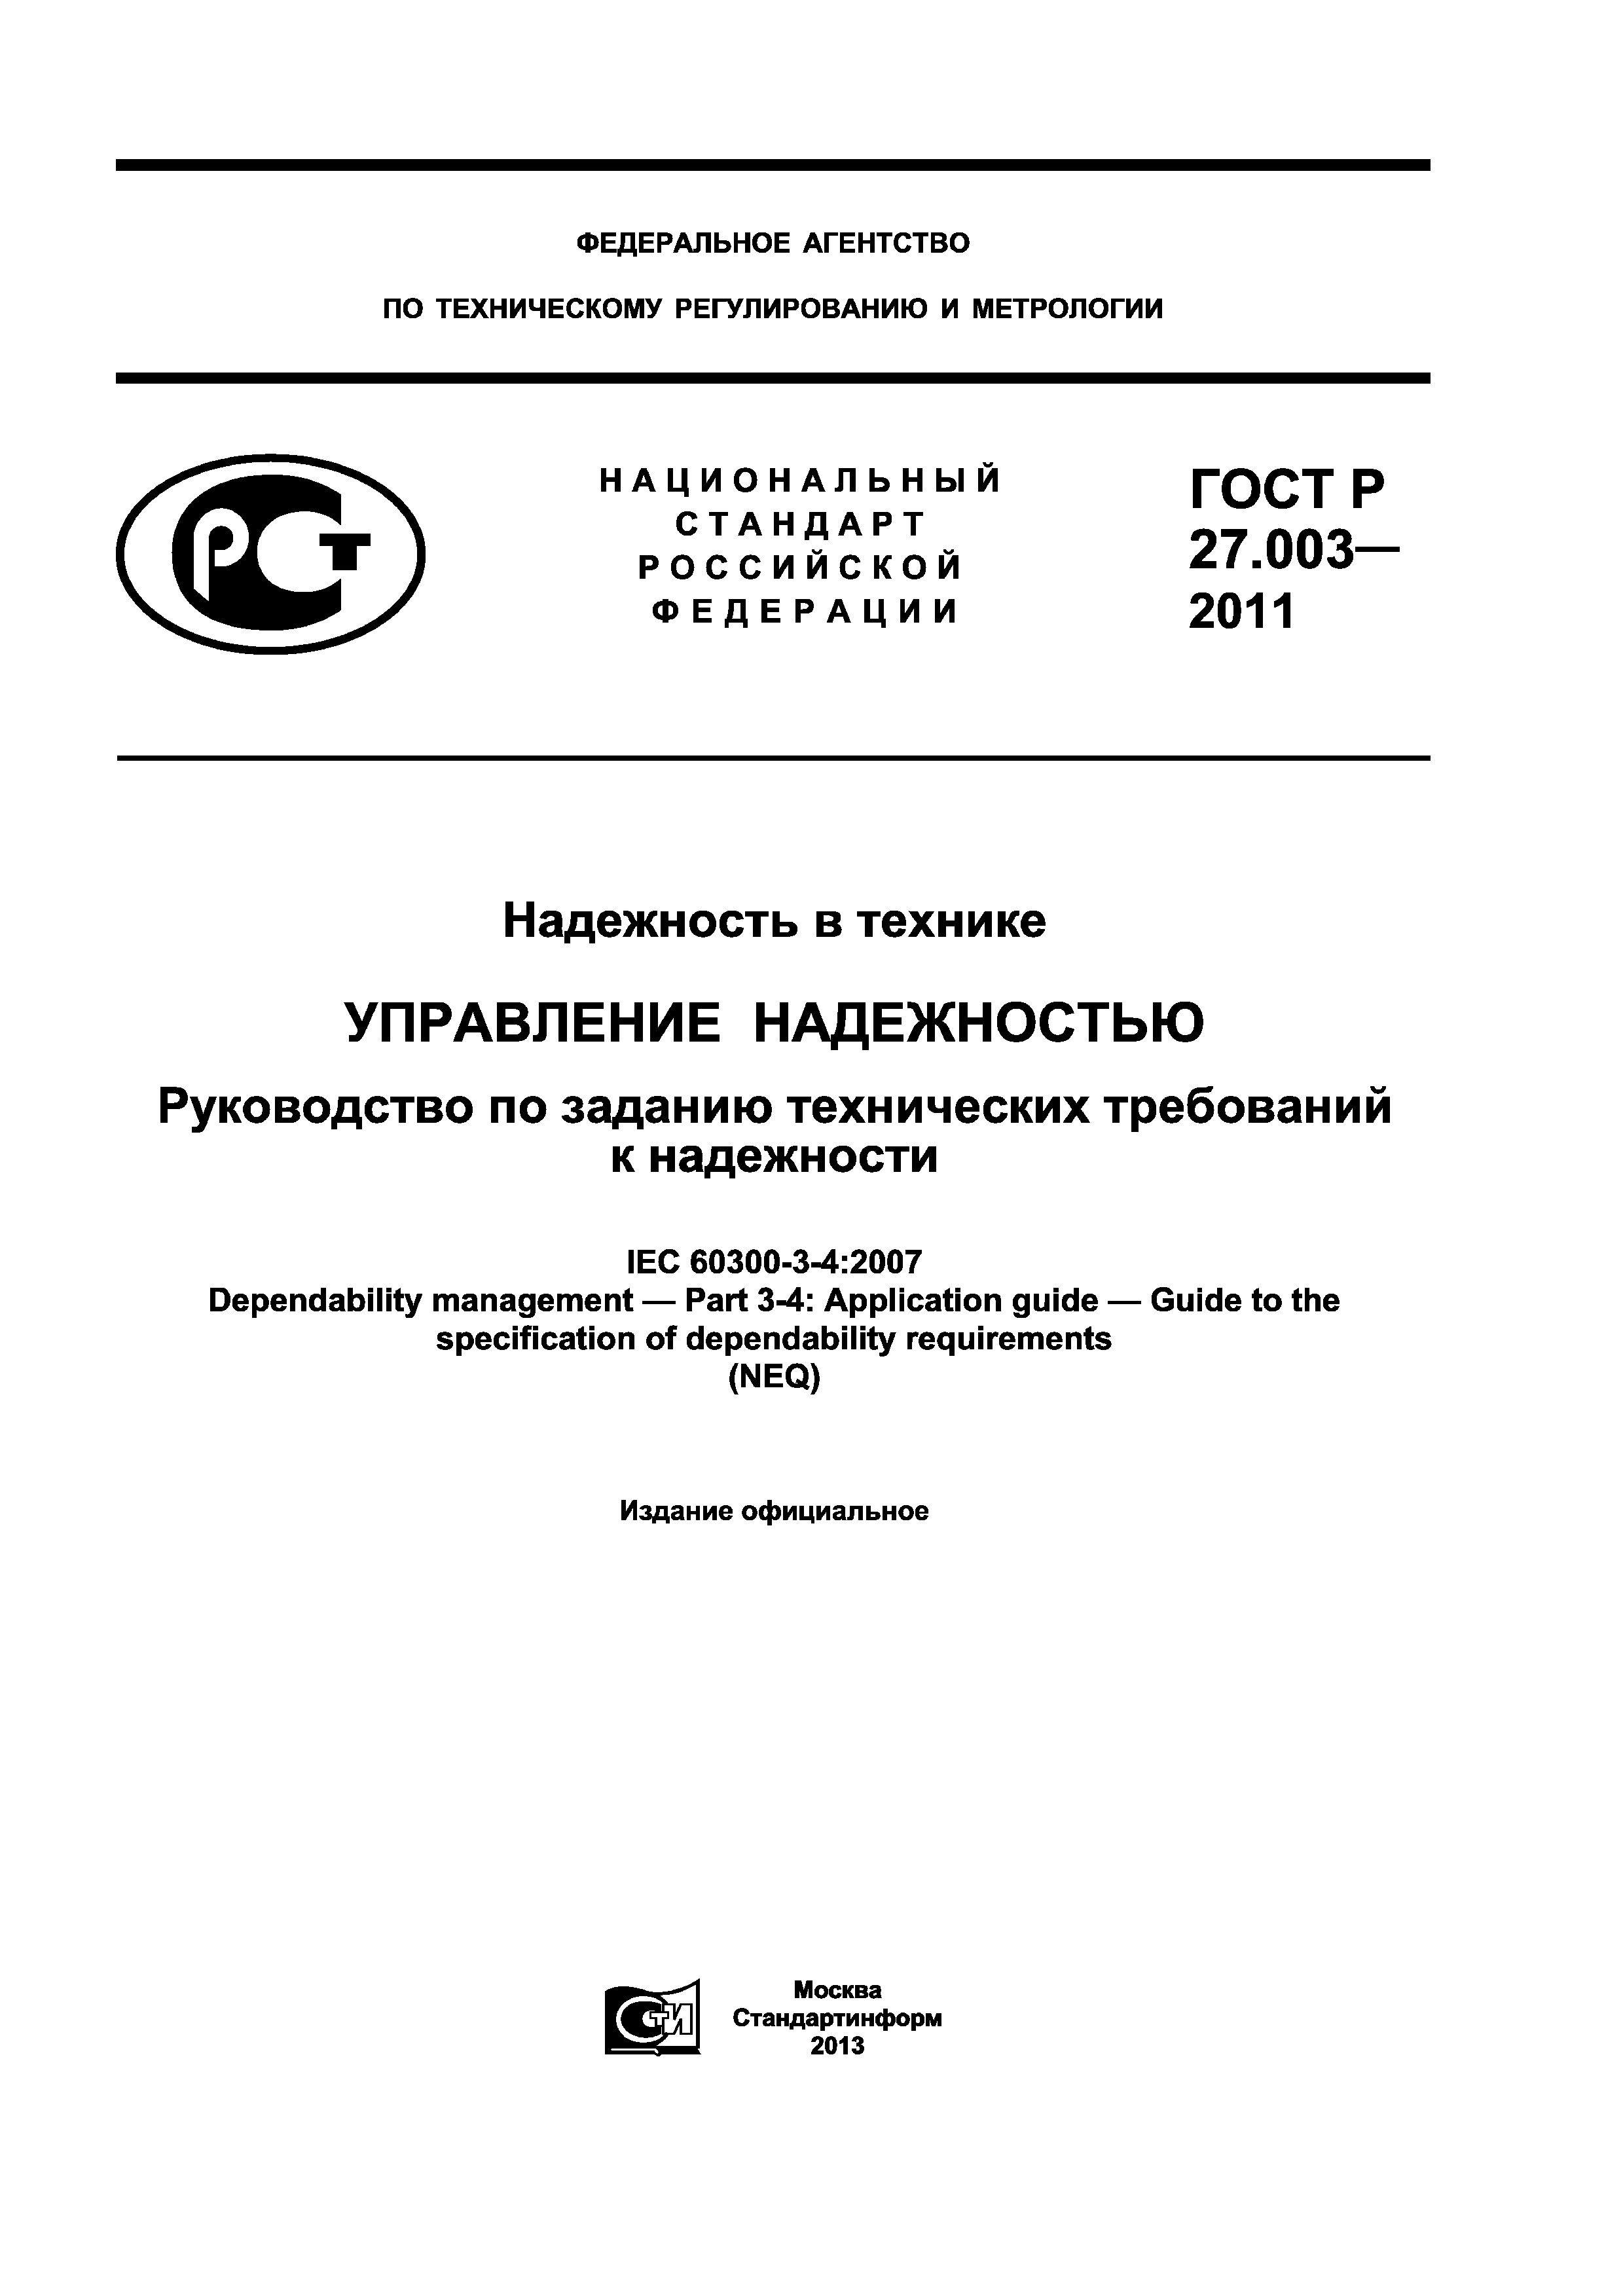 ГОСТ Р 27.003-2011